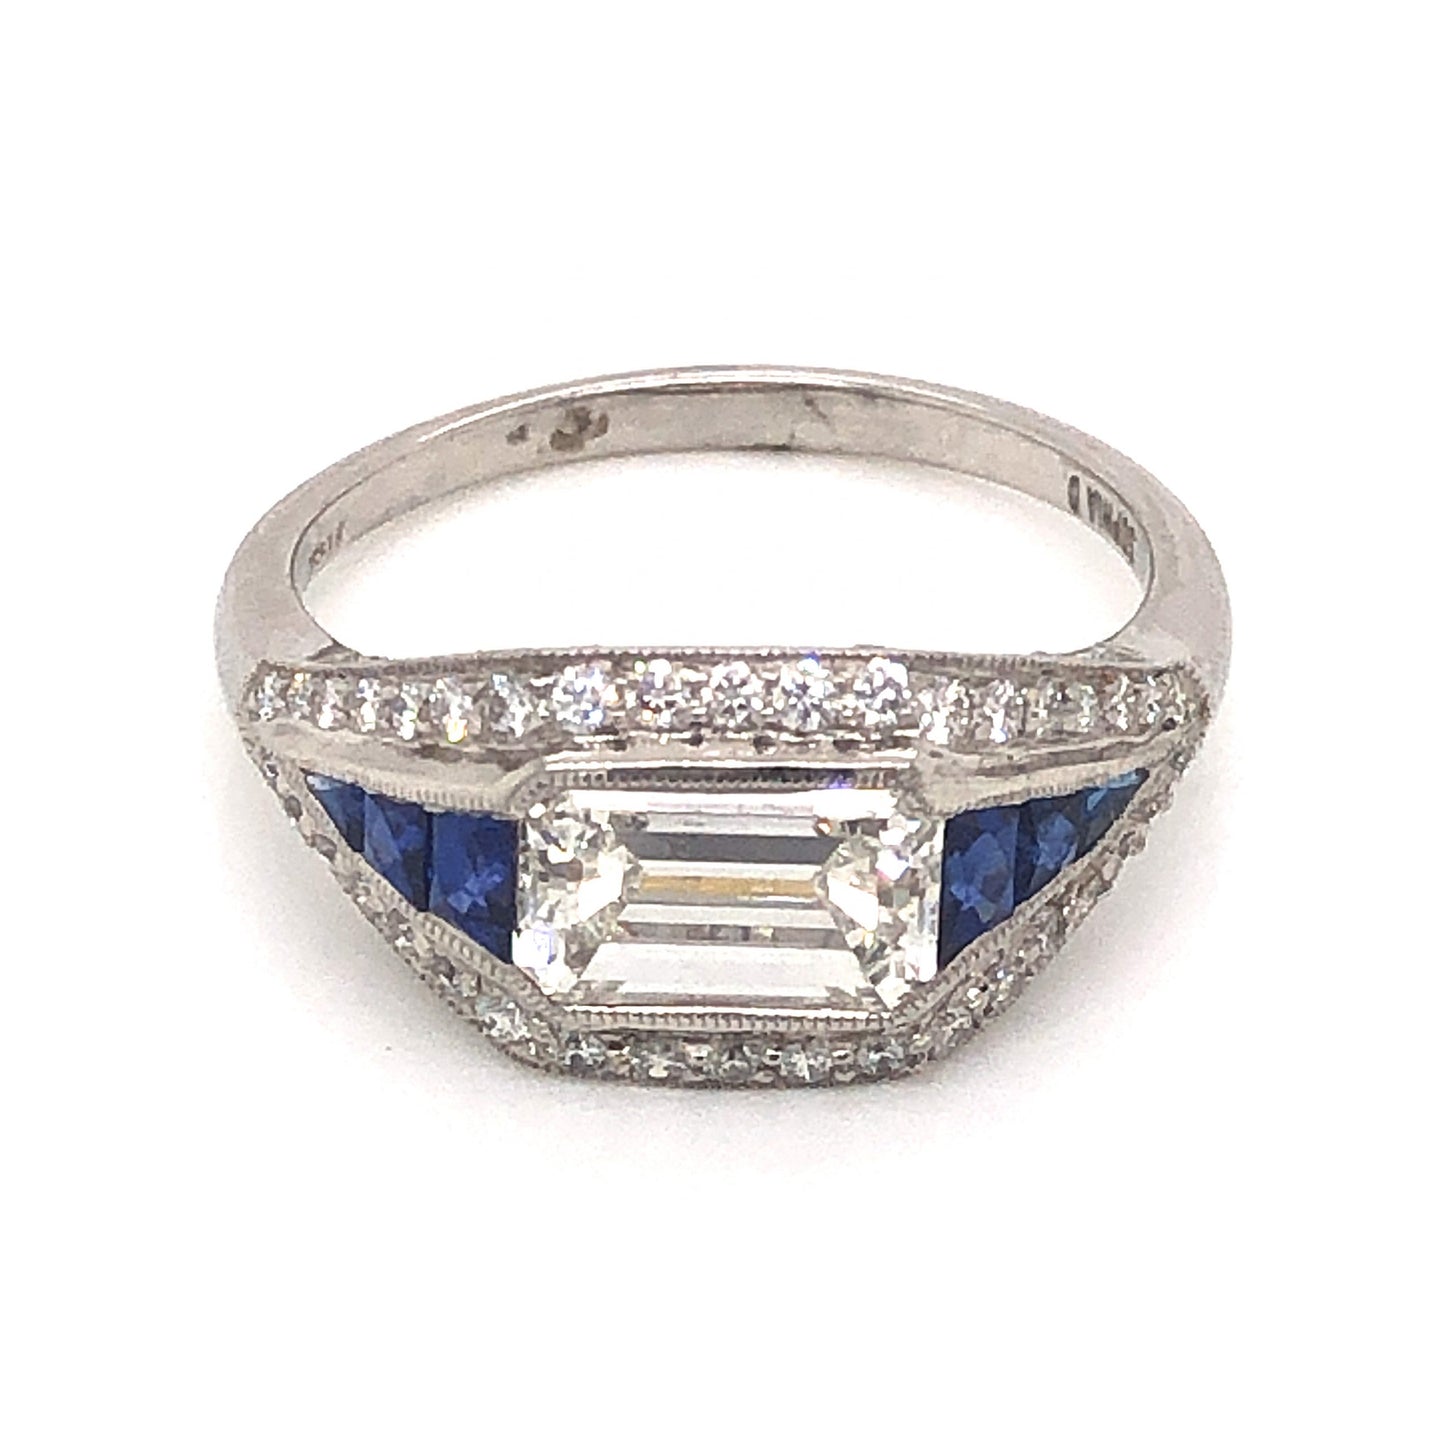 1.14 Emerald Cut Diamond & Sapphire Ring in Platinum